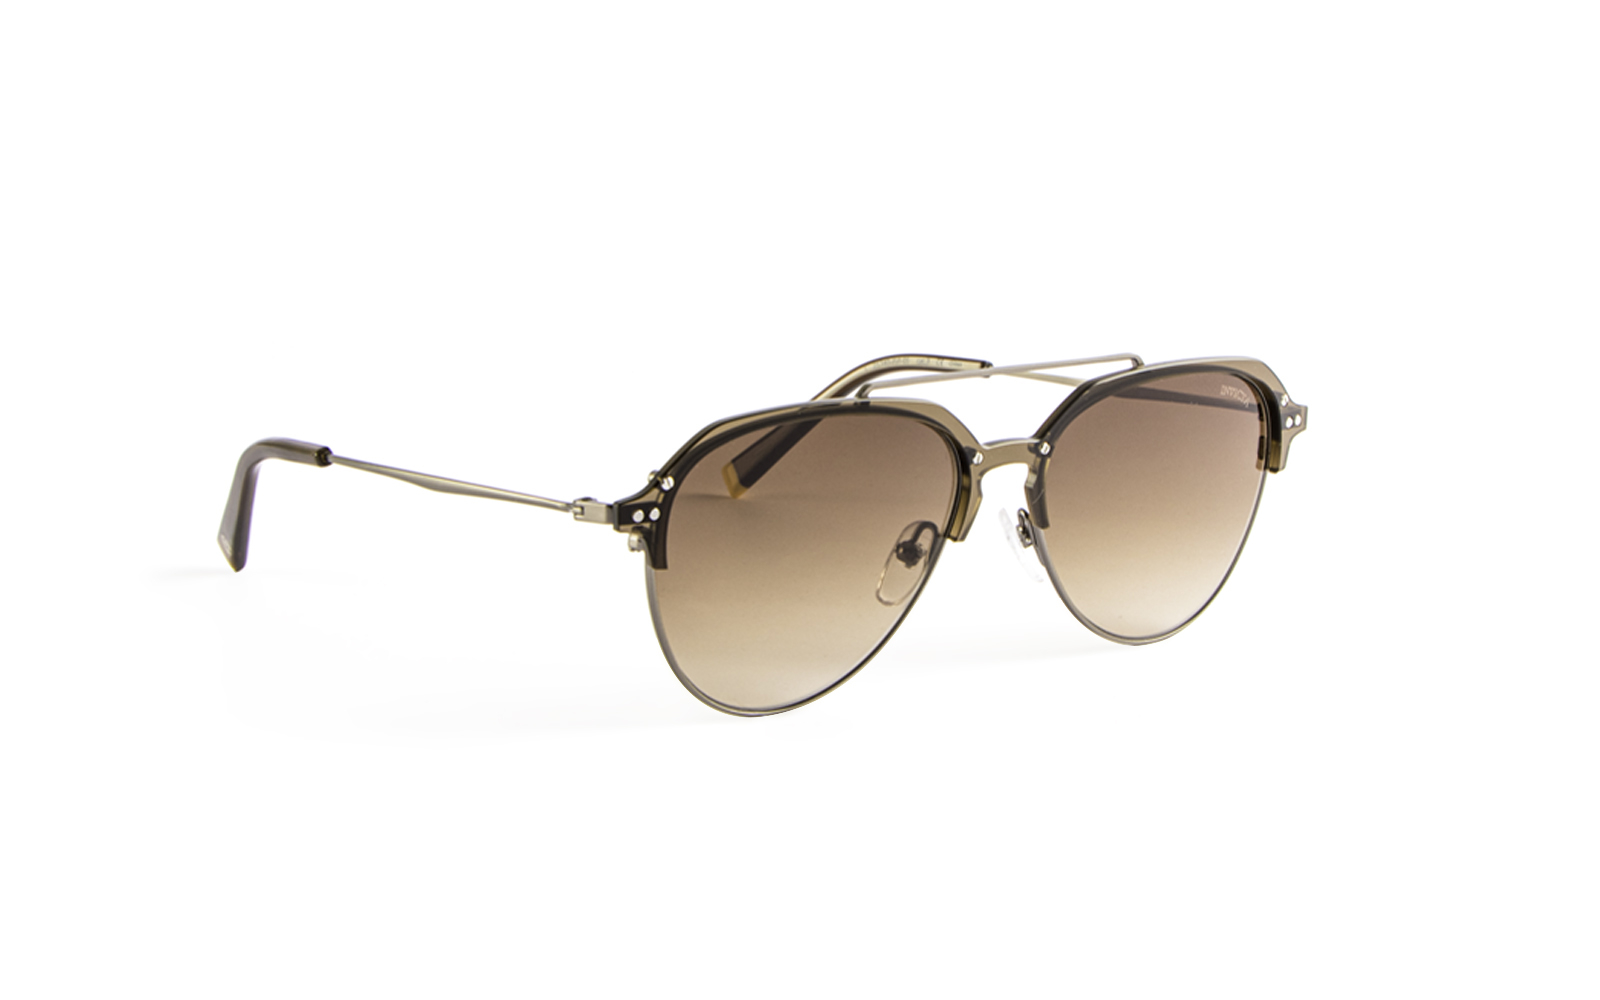 Invicta Men's Aviator Clubmaster Style Sunglasses, Brown (21740-AVI-05) (Eyewear)